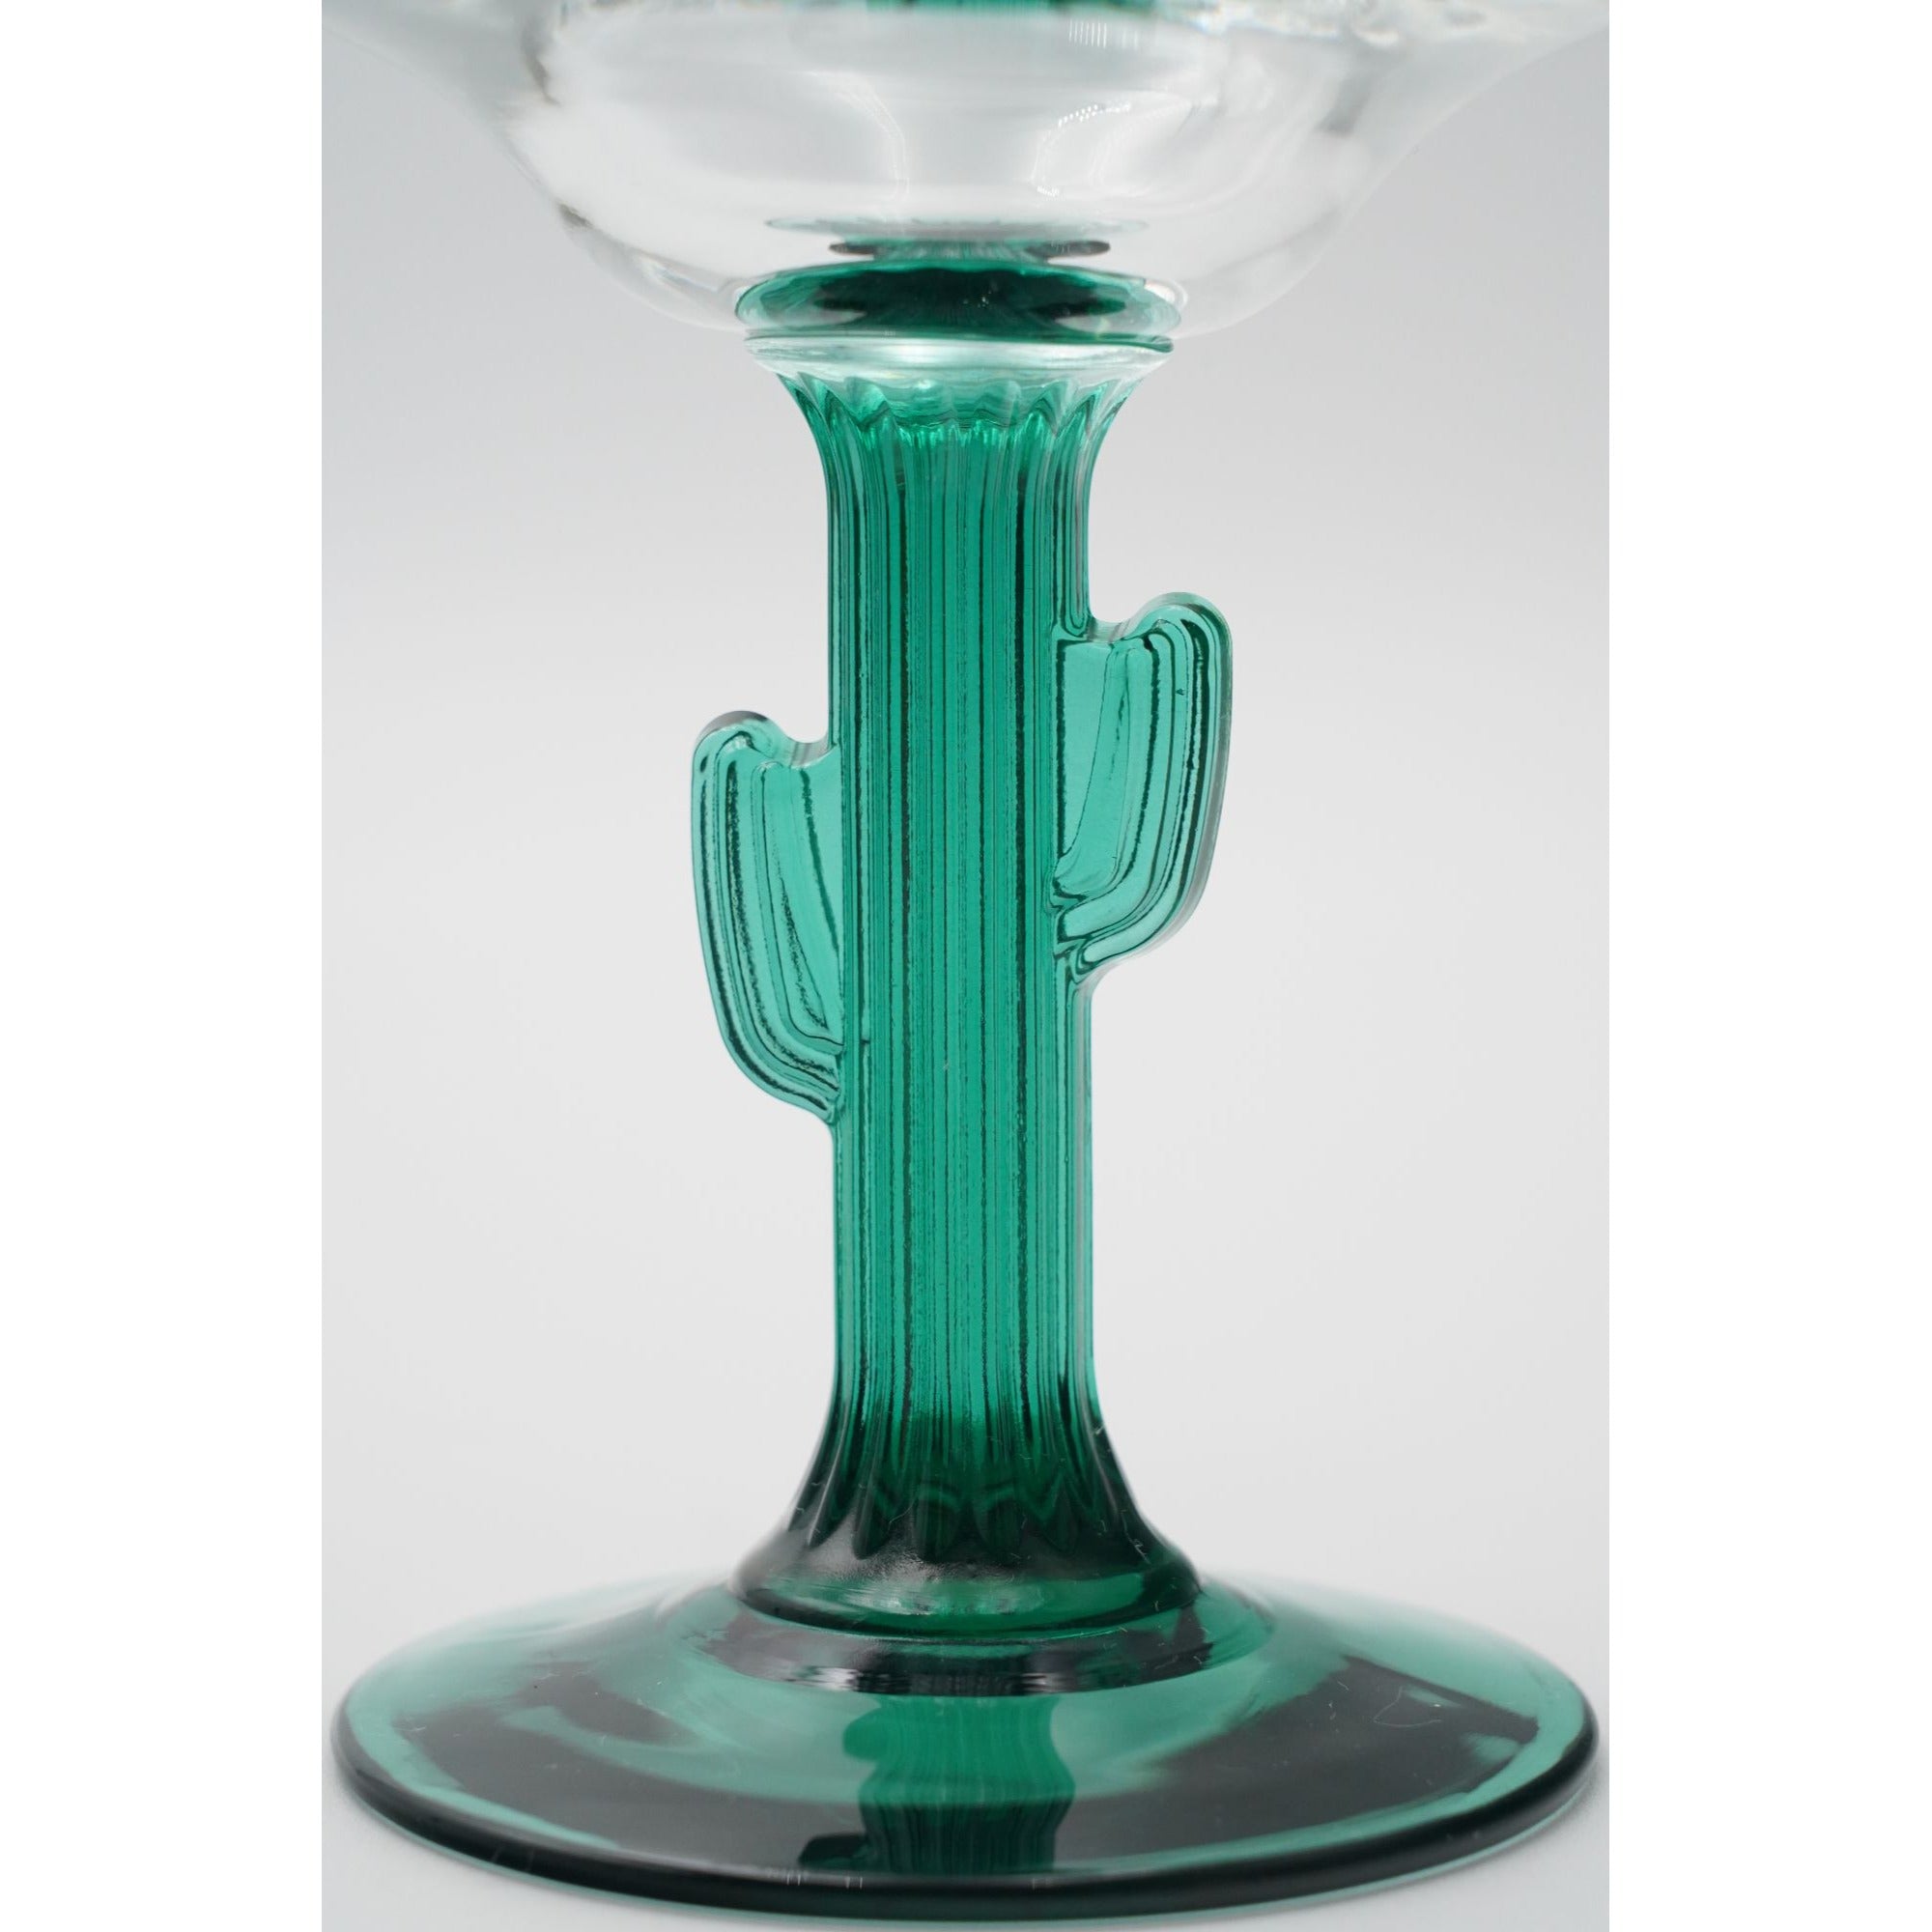 Libbey Cactus Margarita Glasses, 16-ounce, Set of 4